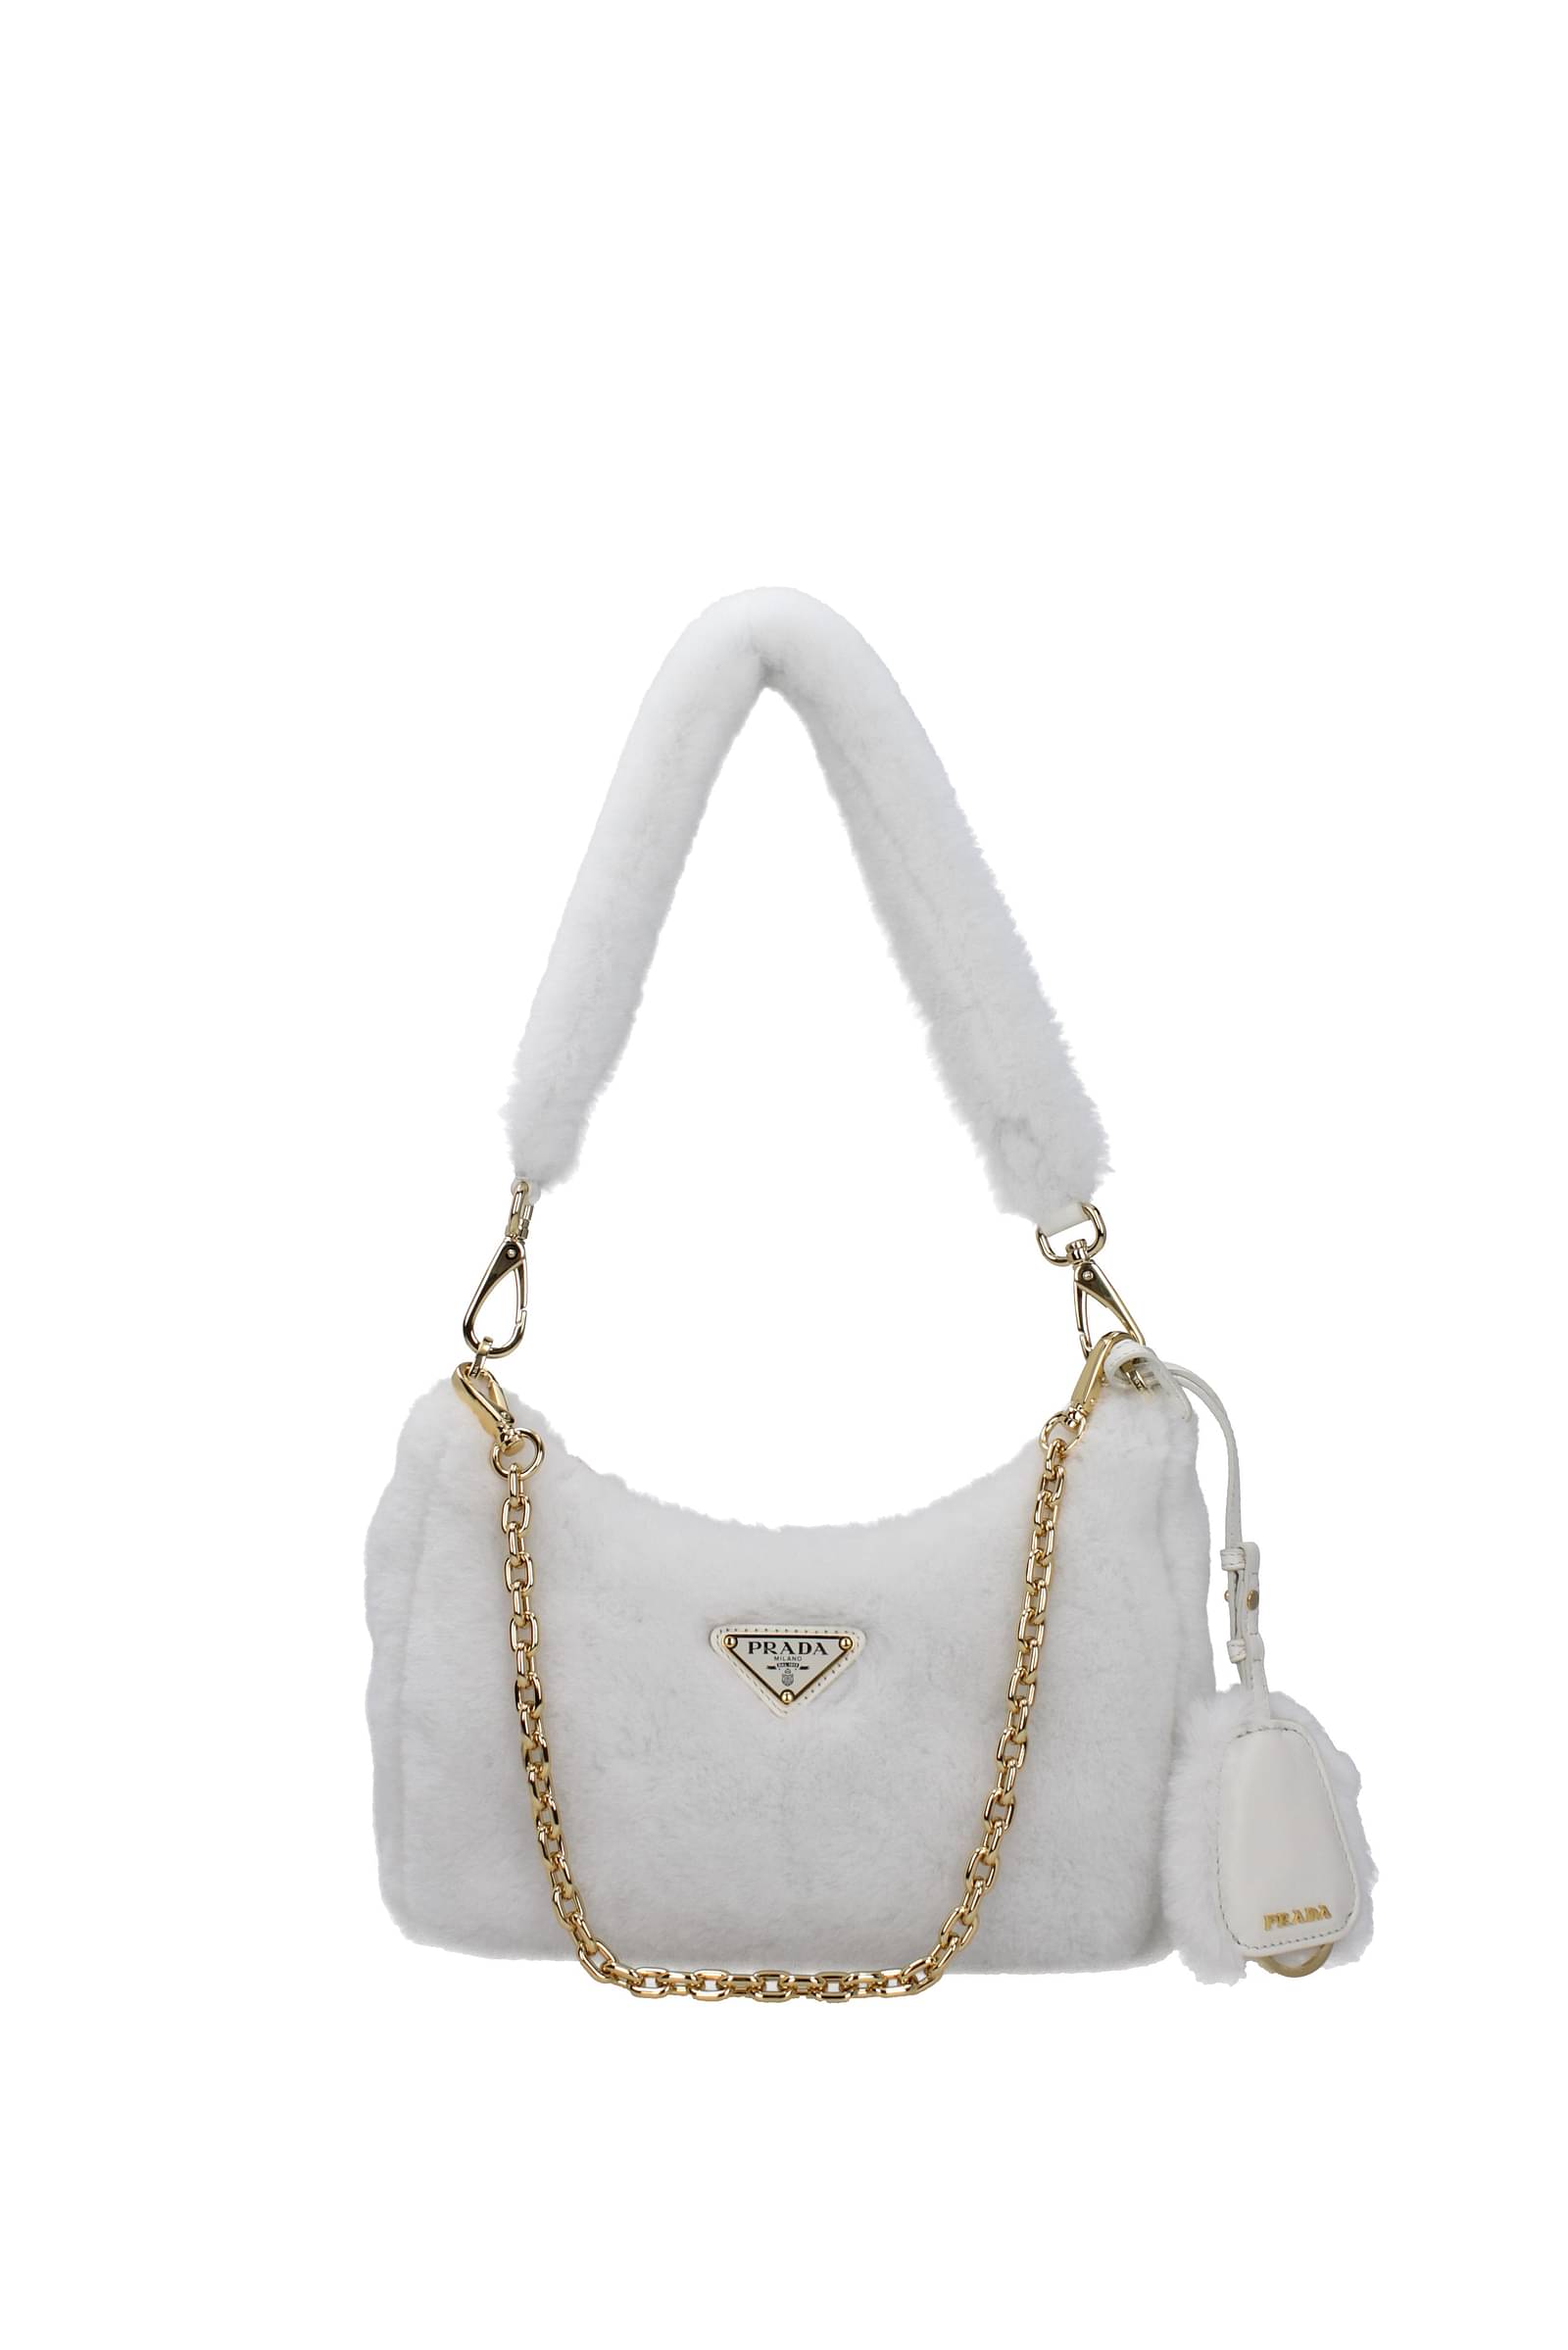 Prada Handbag BR0830 In White Leather | Prada designer handb… | Flickr